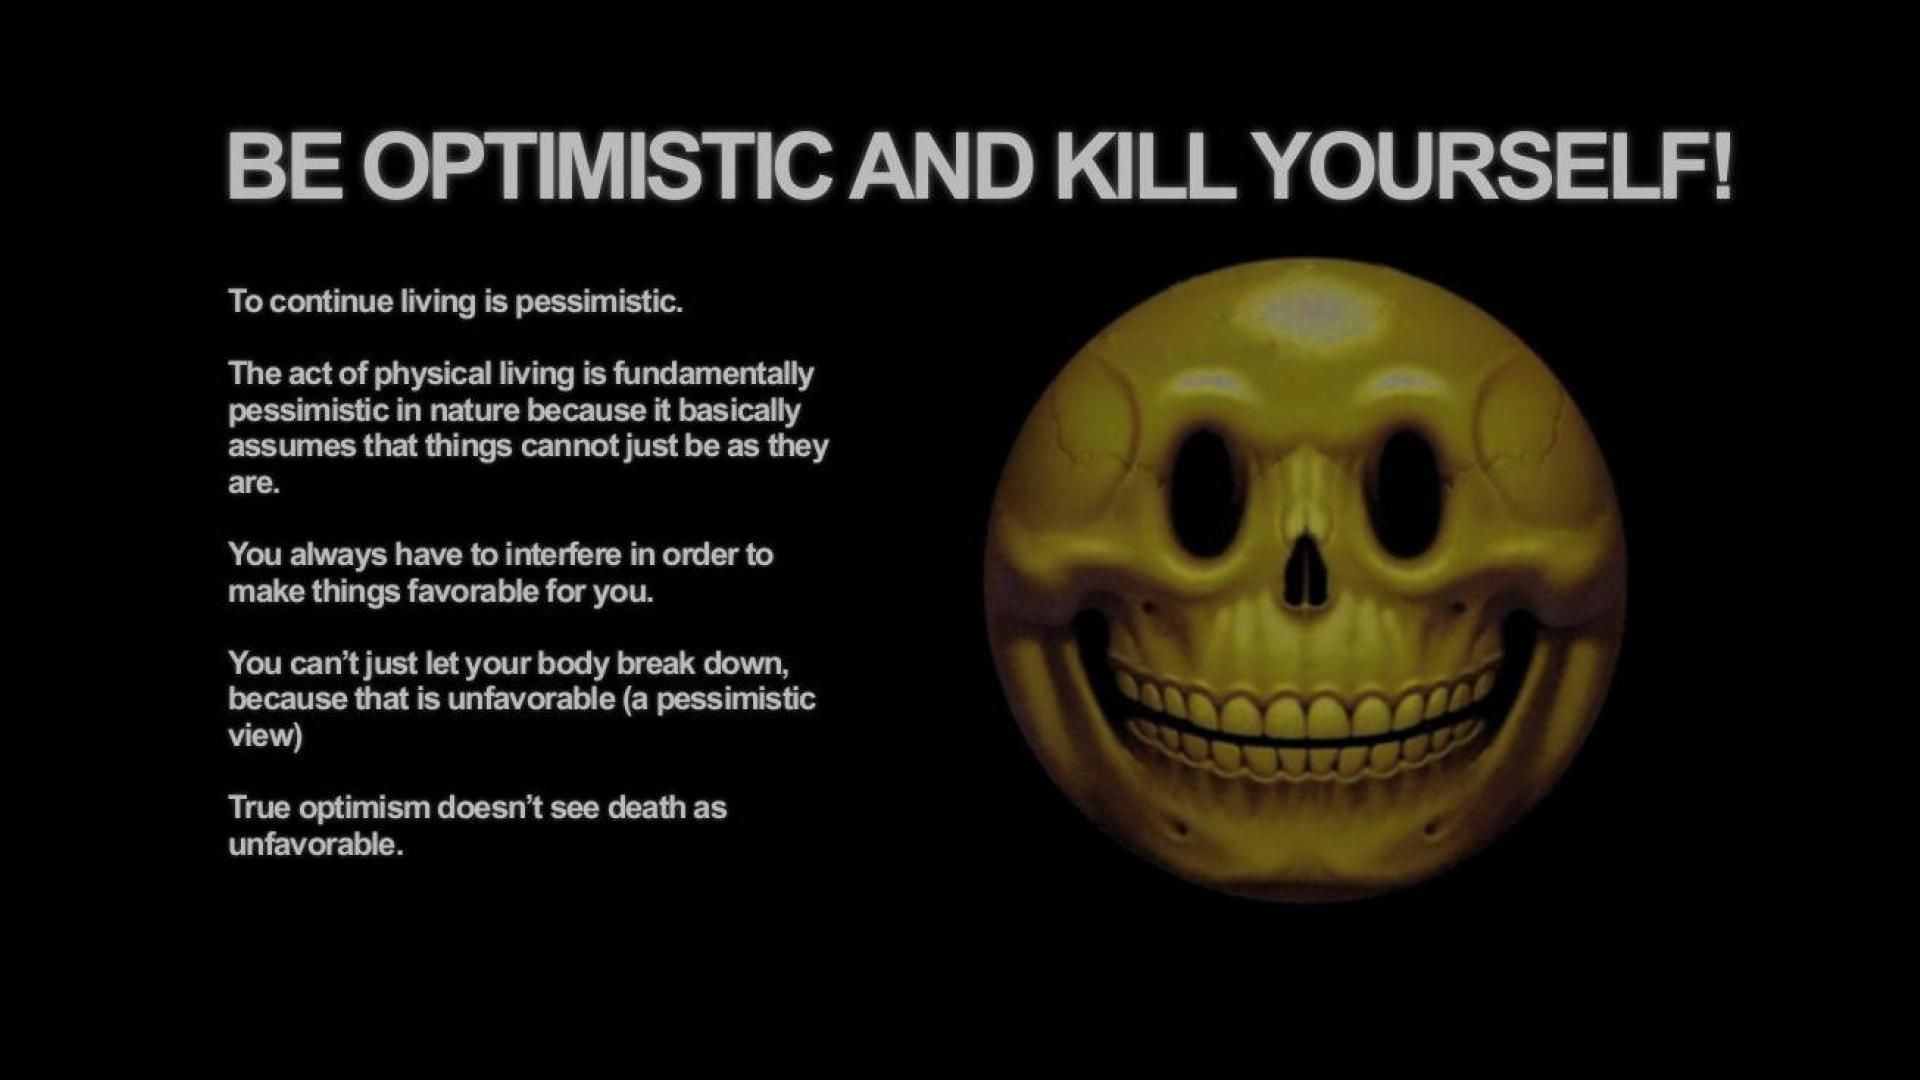 Black death happy quotes suicide wallpaper - High resolution